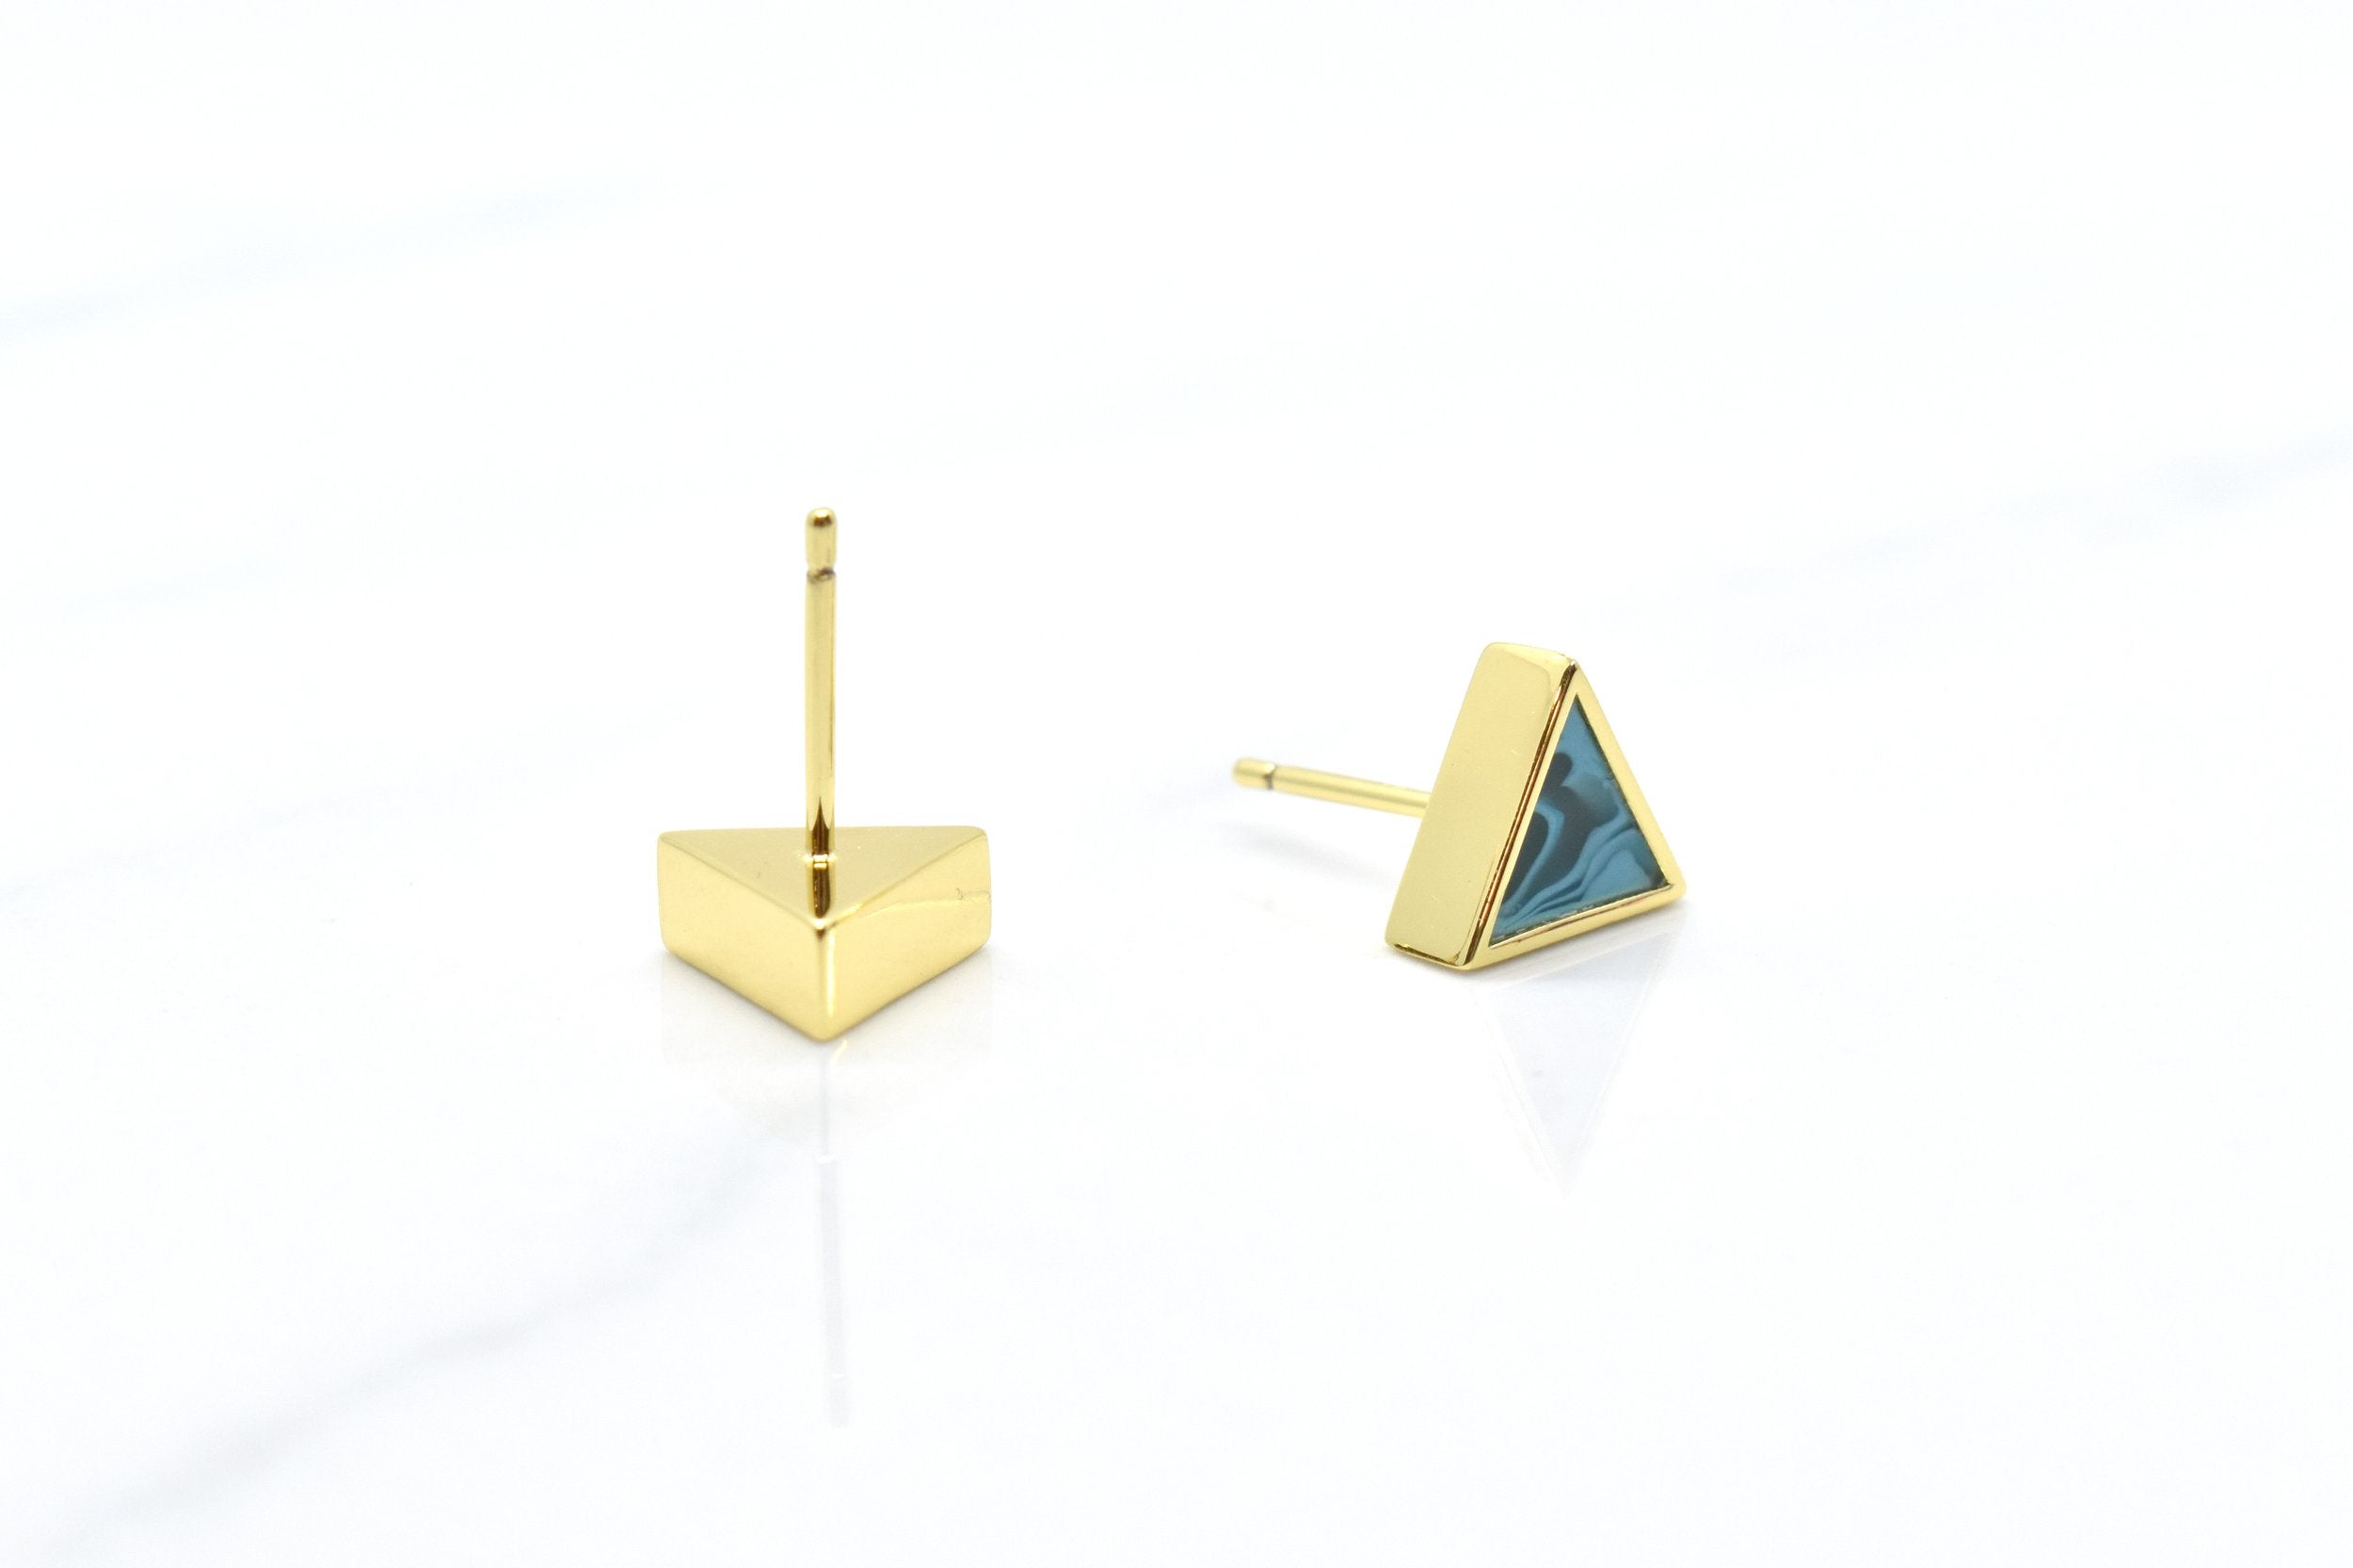 14k gold plated stud post earring set in aqua triangles